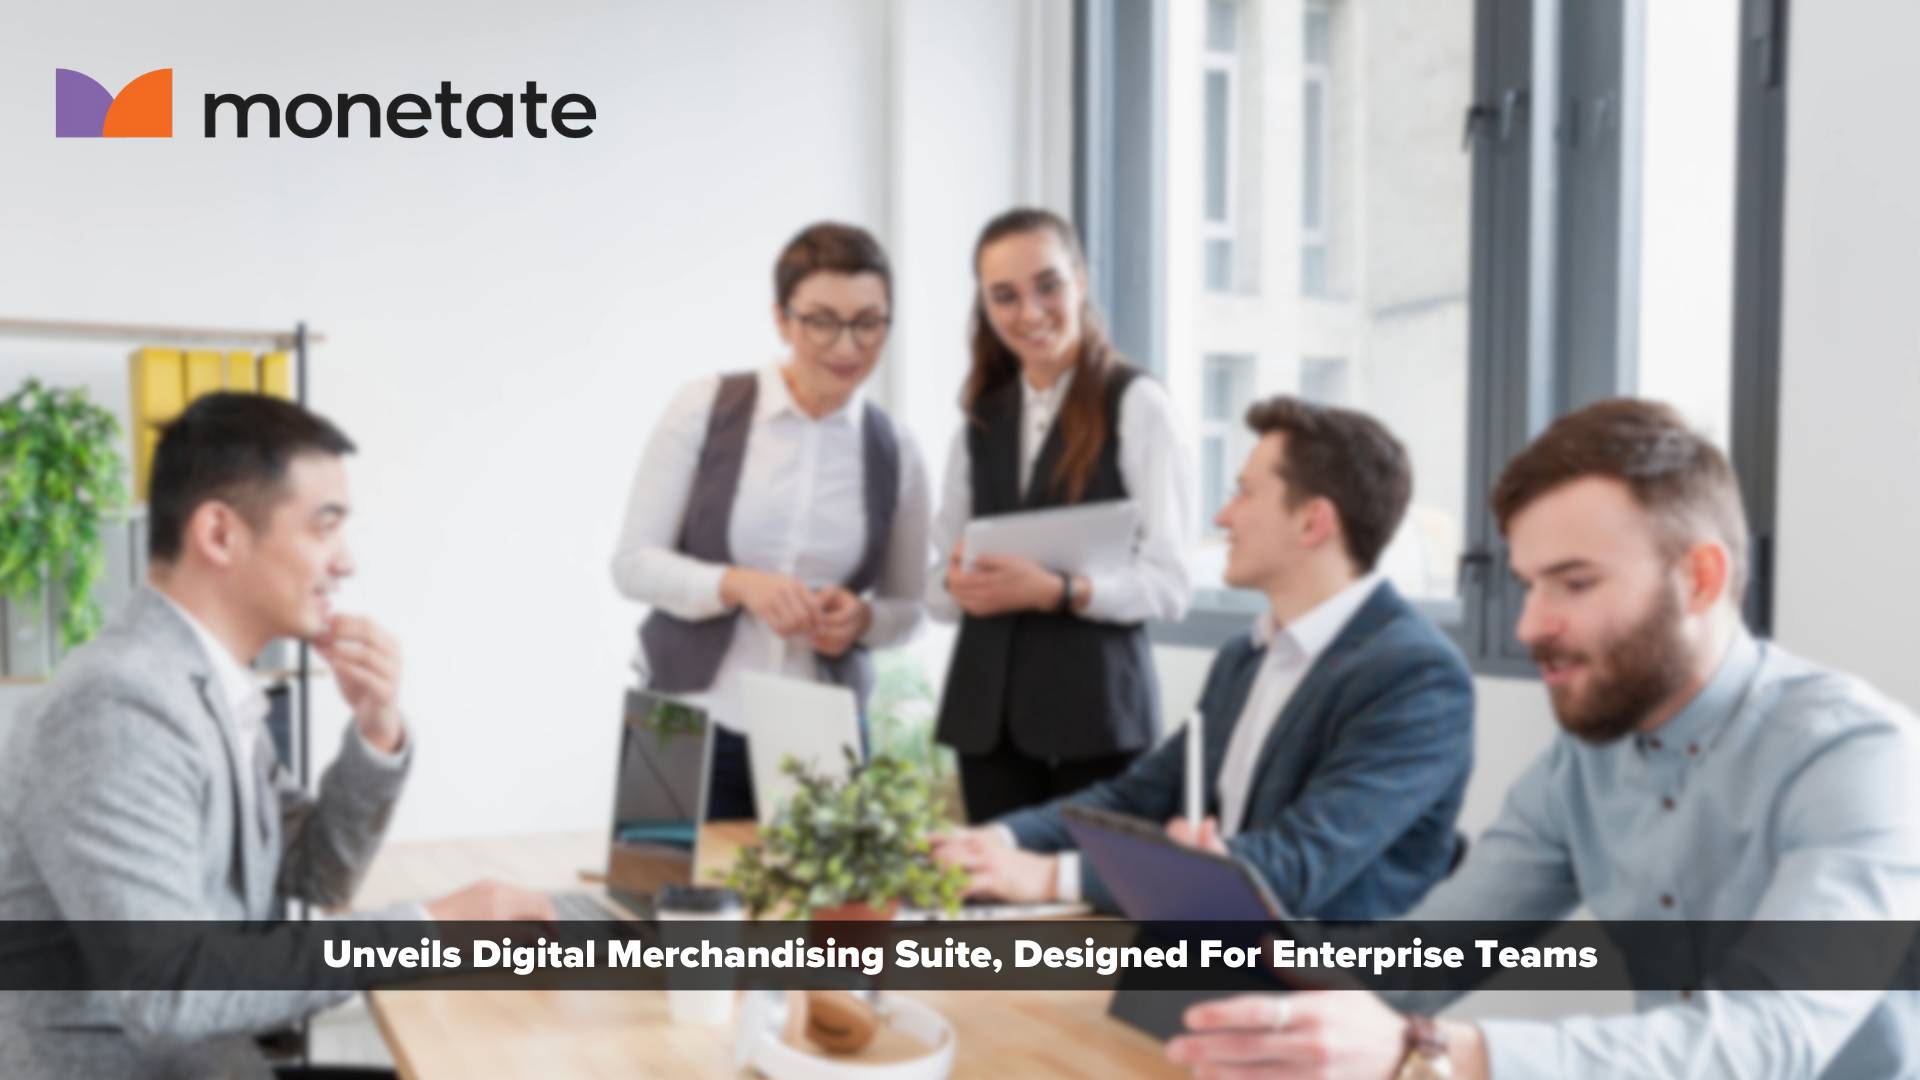 Monetate Unveils Digital Merchandising Suite, Designed For Enterprise Teams